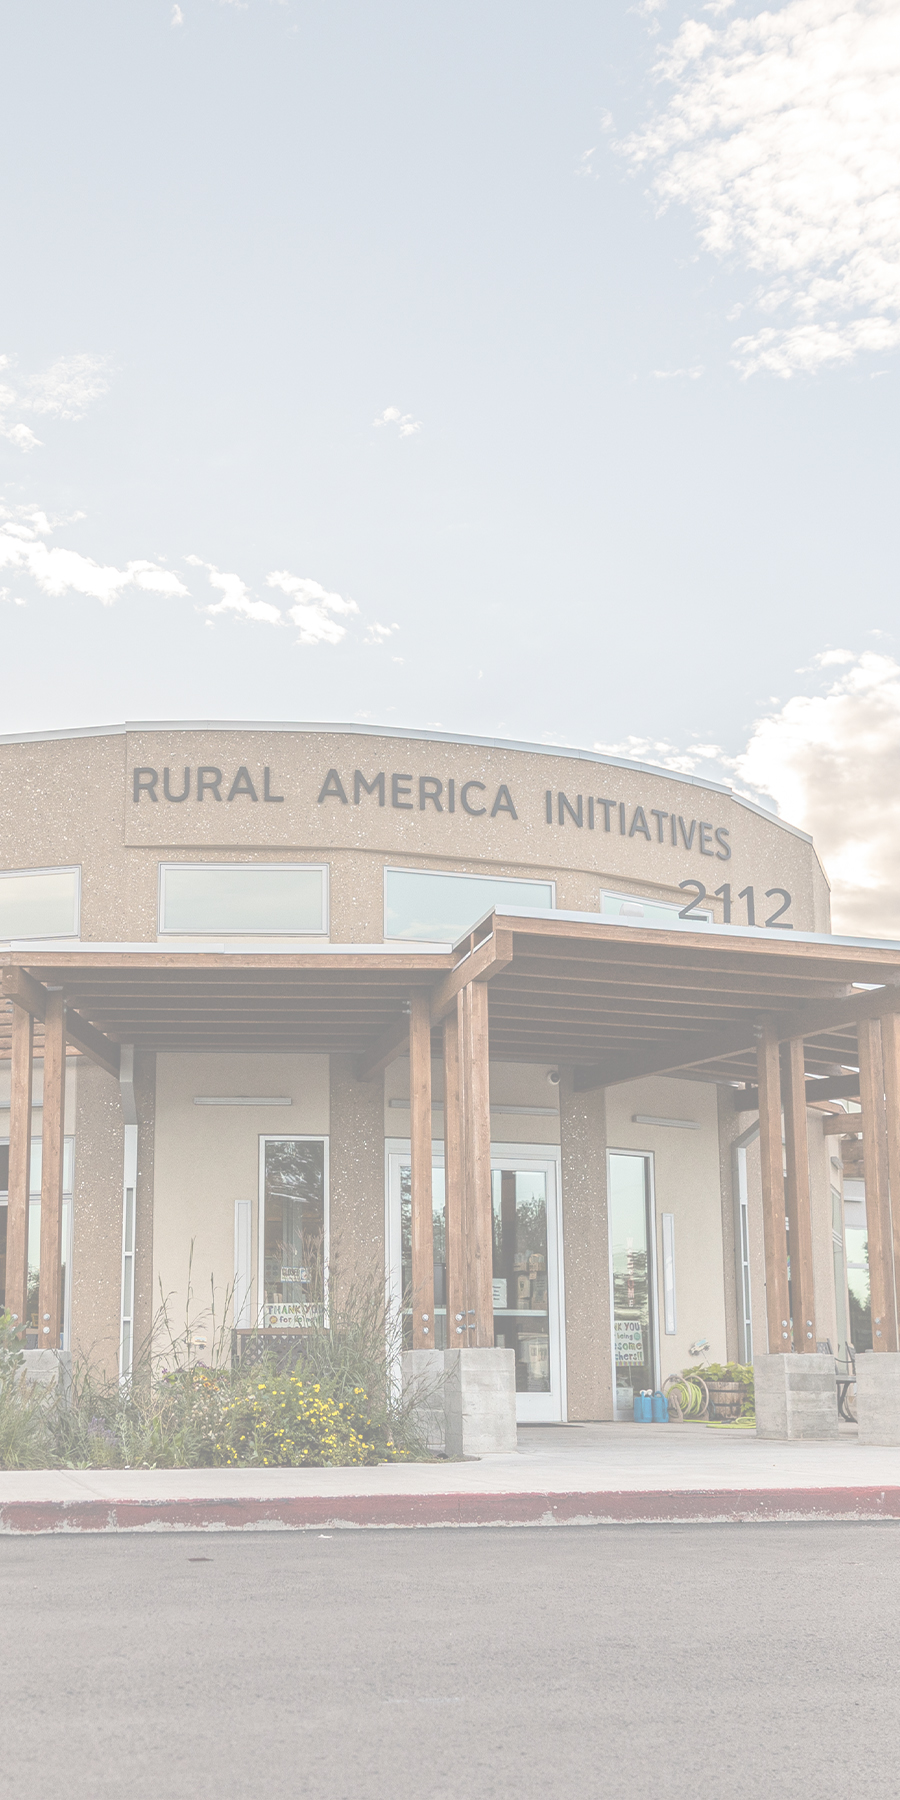 Rural America Initiatives building